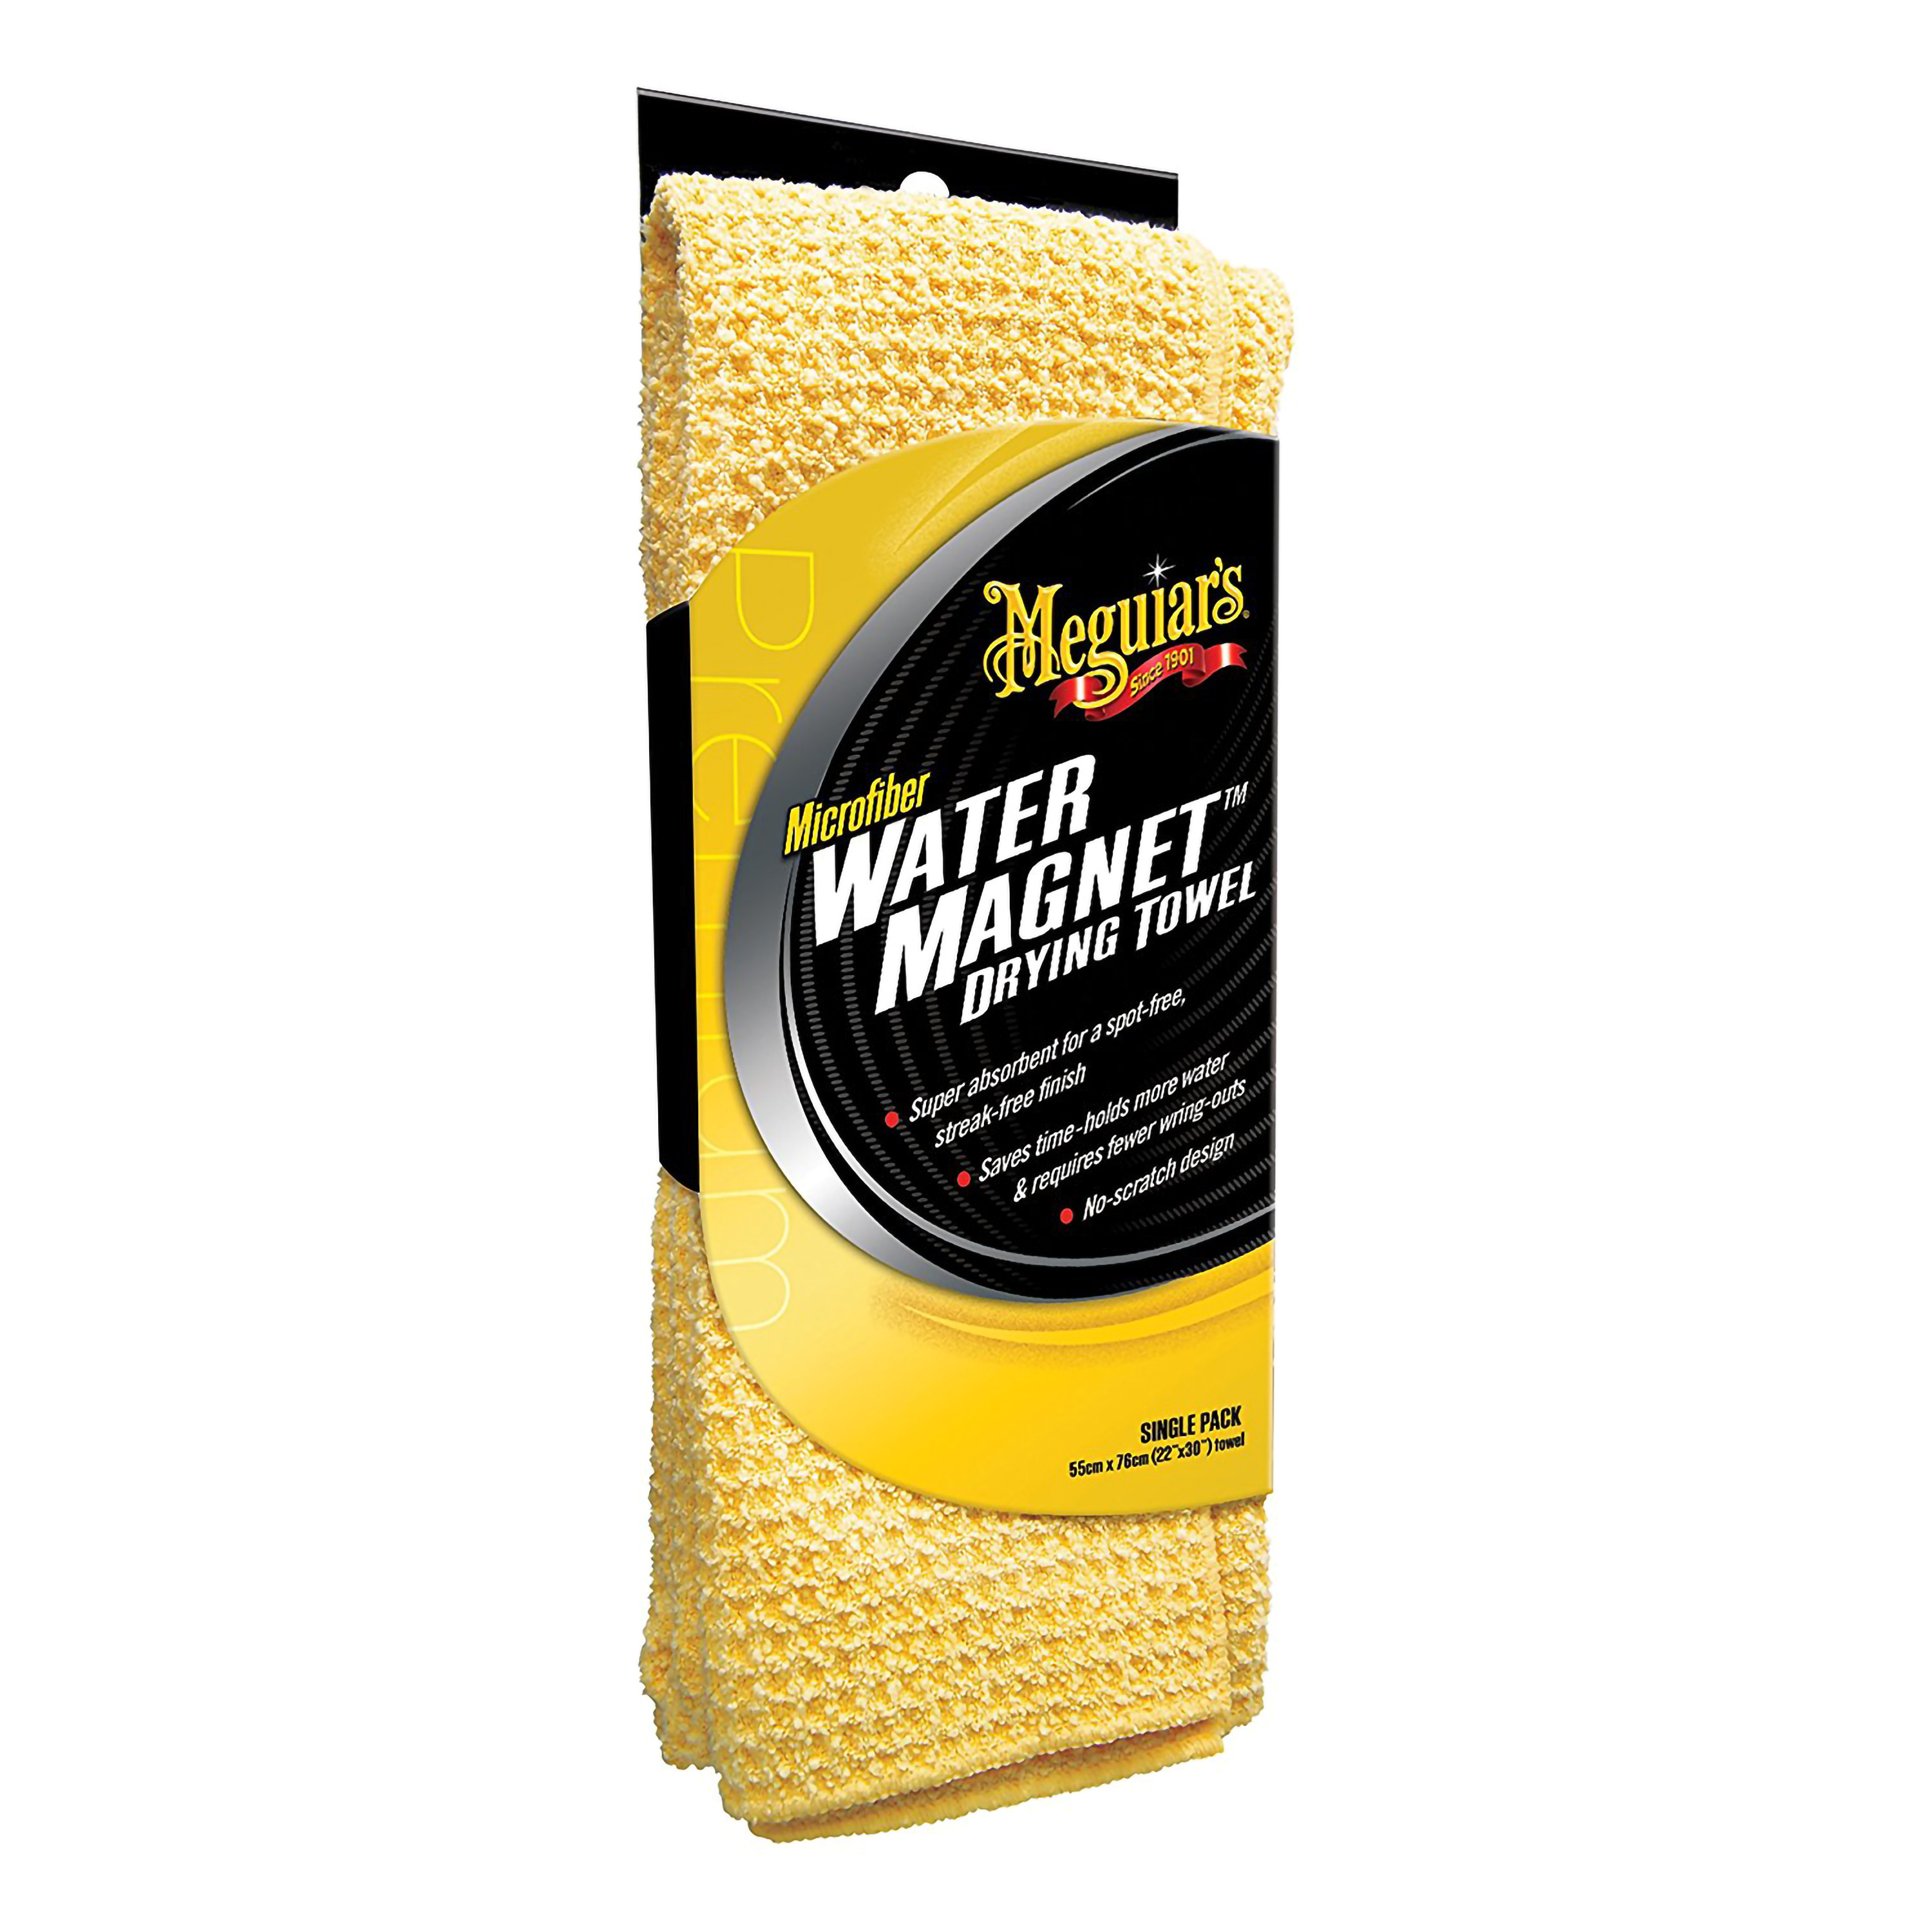 Meguiar's X2000 Water Magnet Microfiber Drying Towel, 1 Pack - image 1 of 12